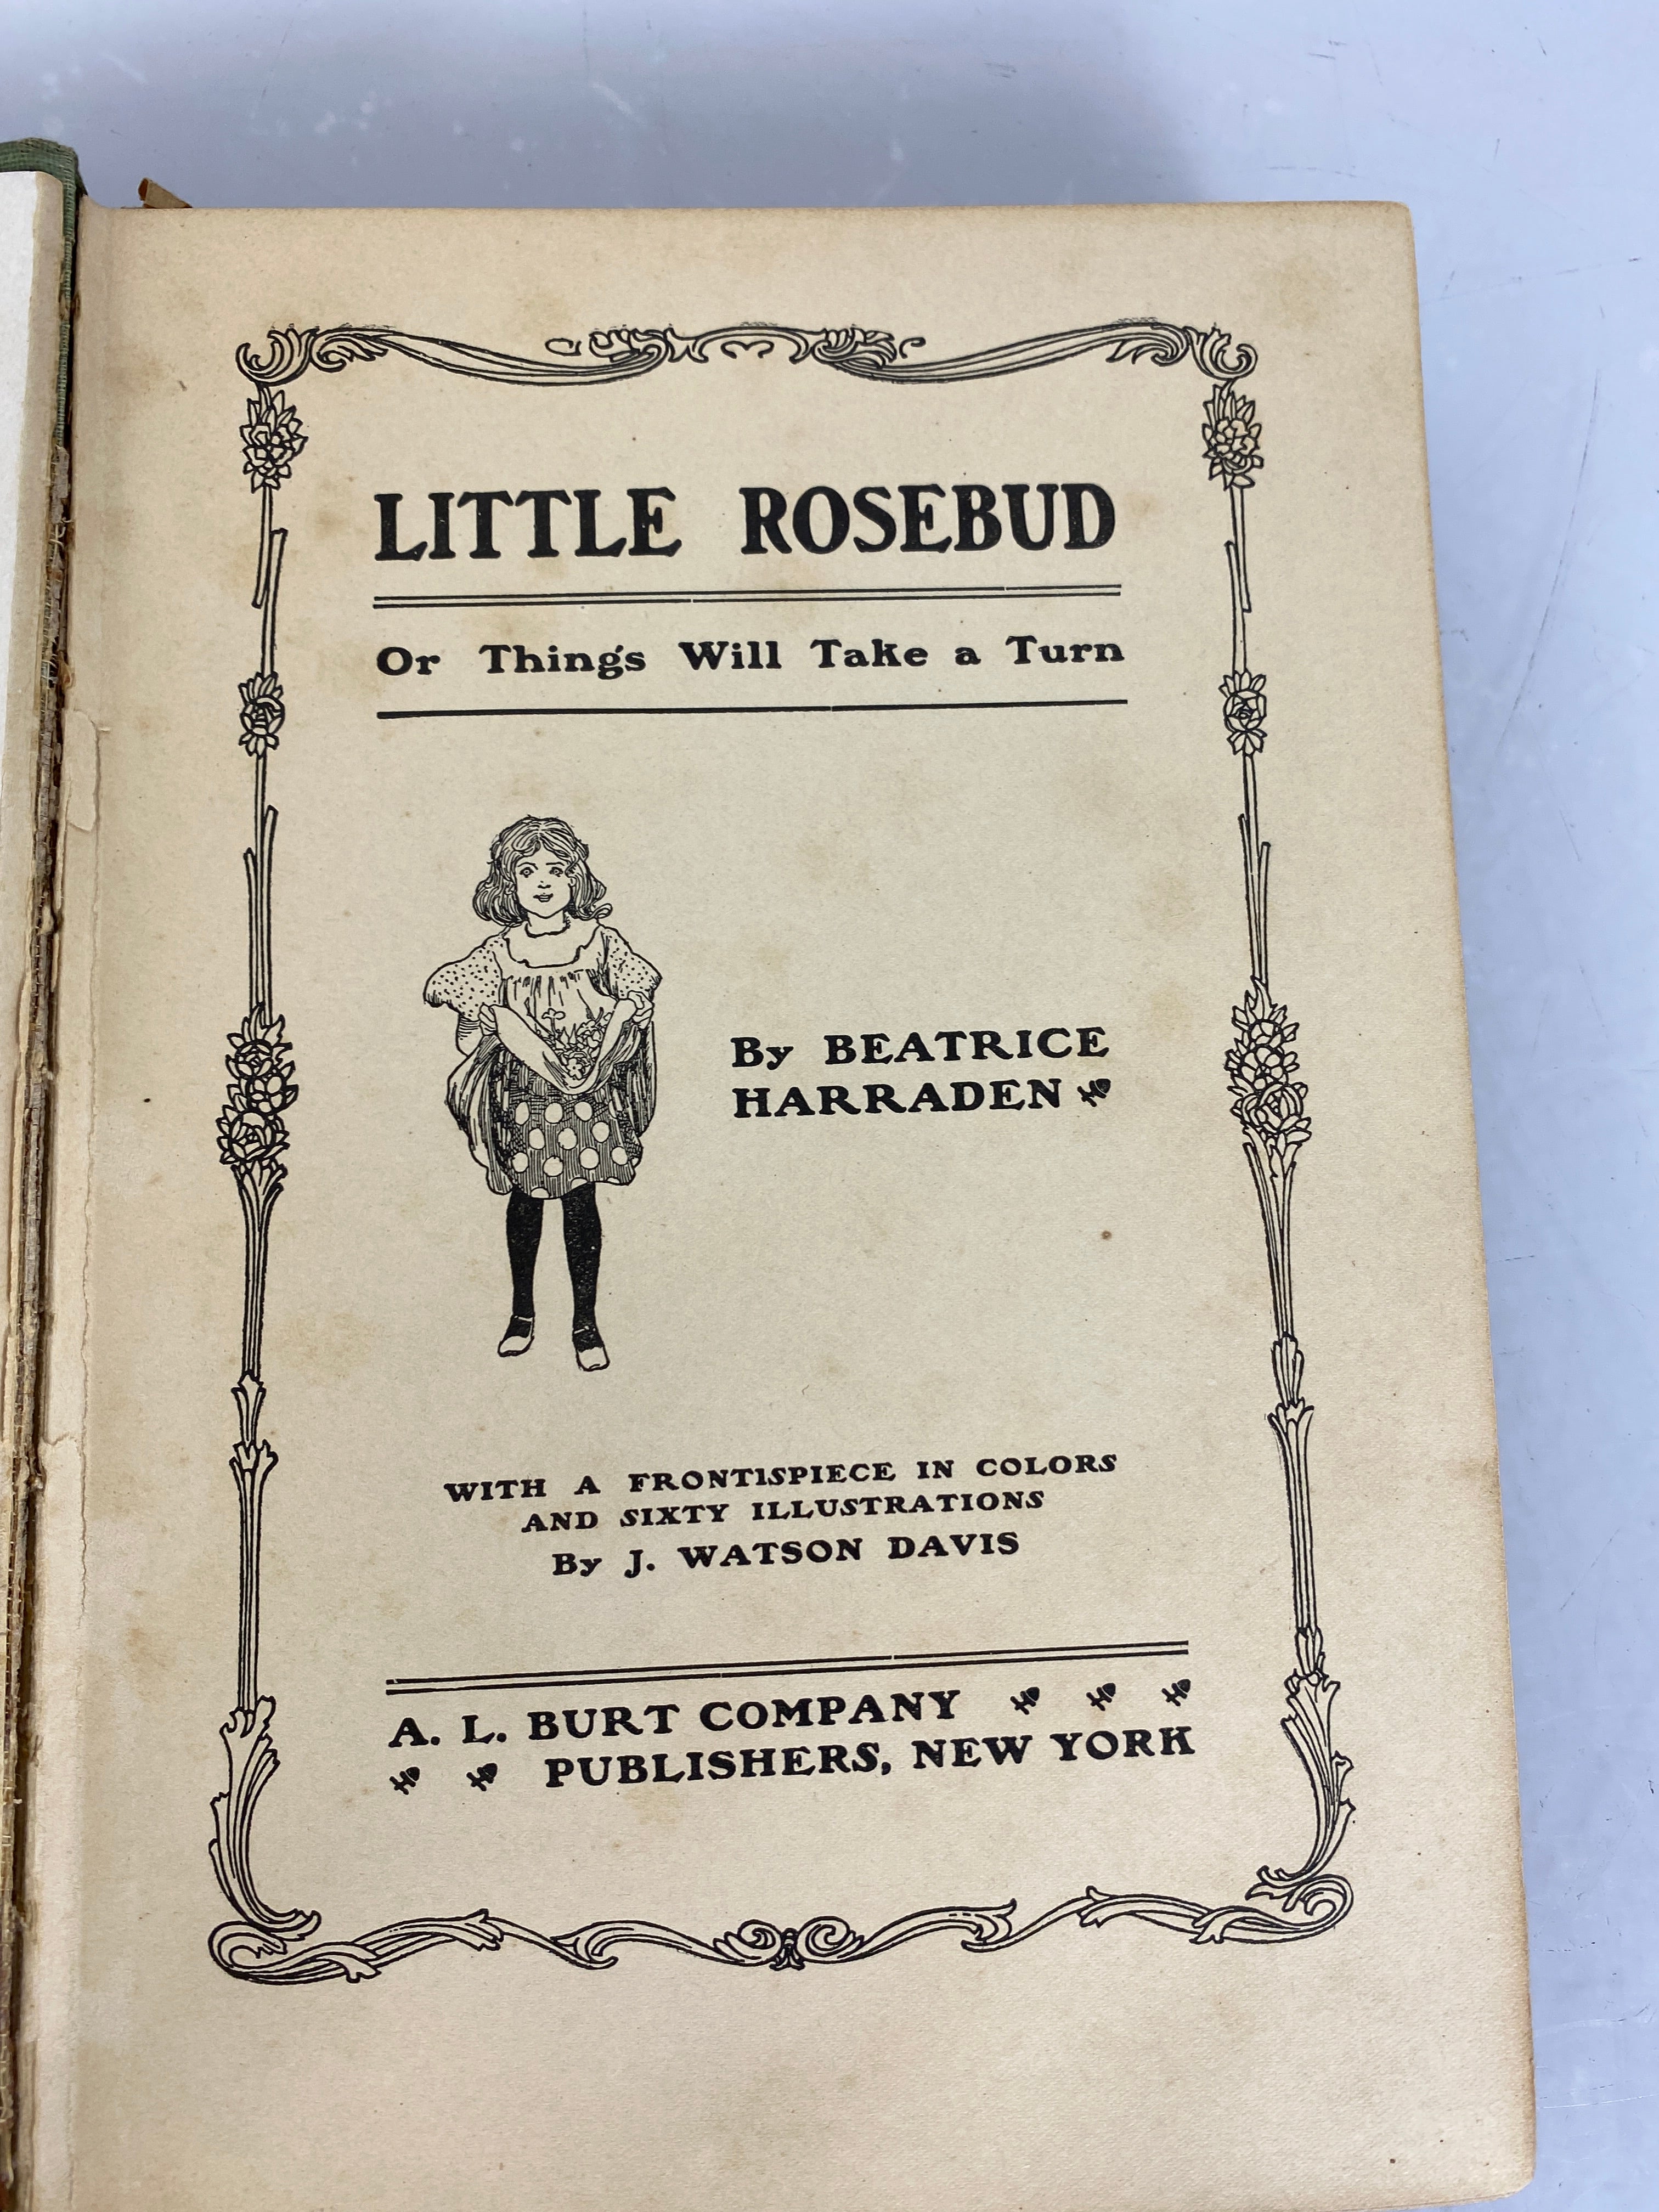 Little Rosebud by Beatrice Harraden c1900 A.L. Burt Company HC